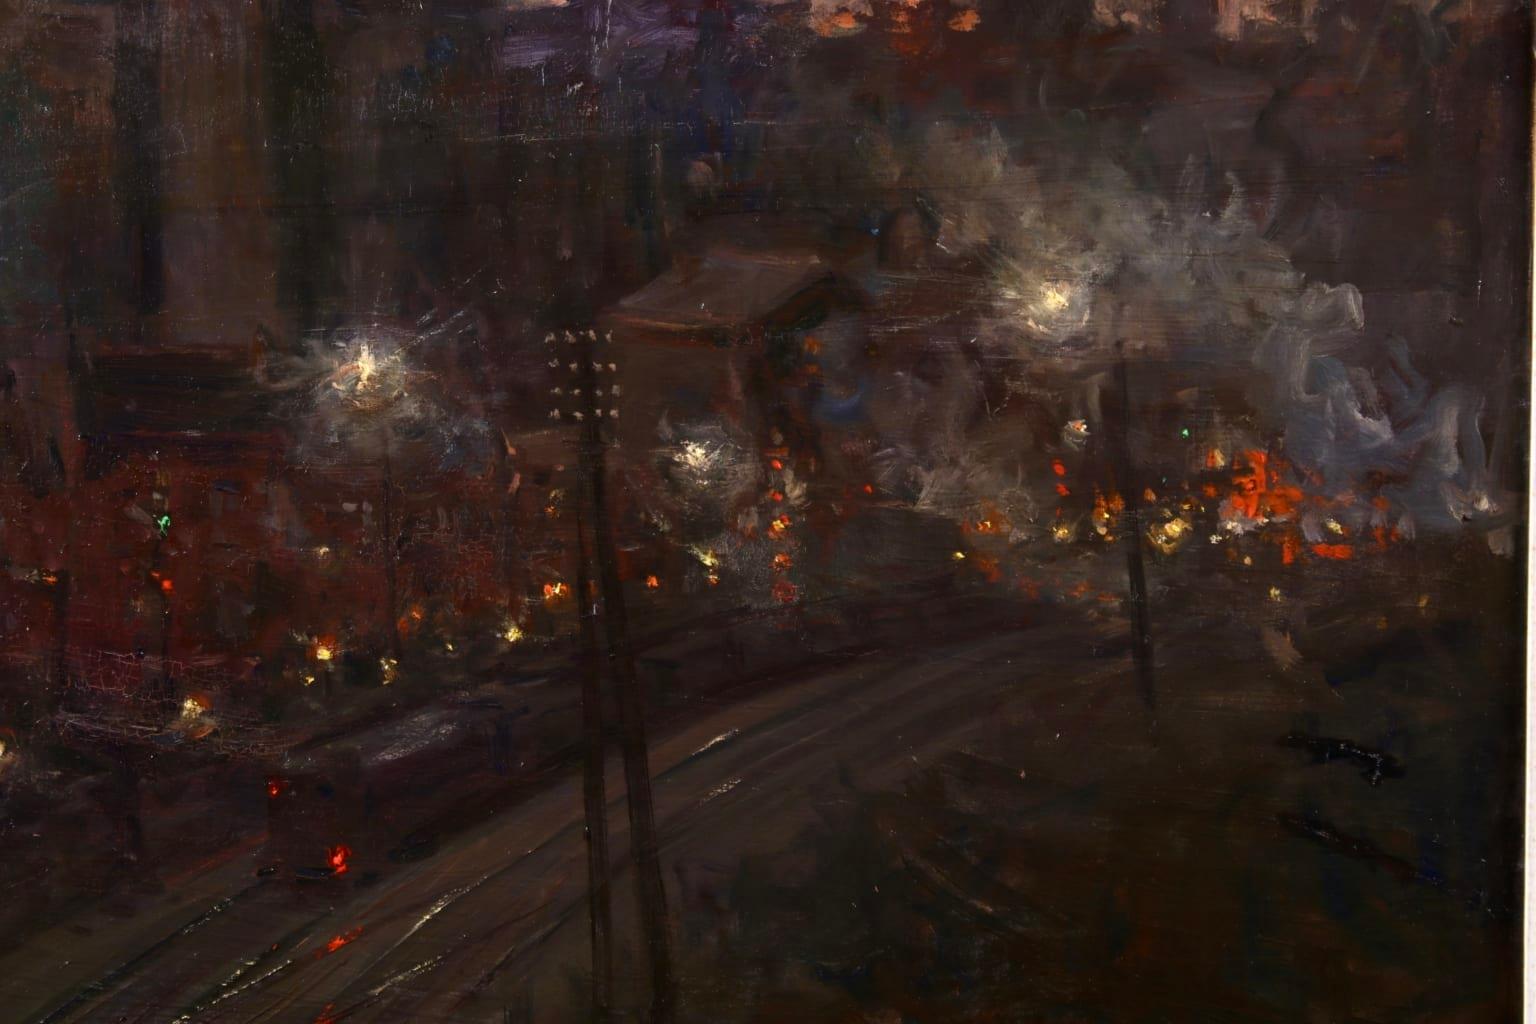 Blast Furnaces - Night - Realist Oil, Industrial Cityscape by Oswald Poreau 5